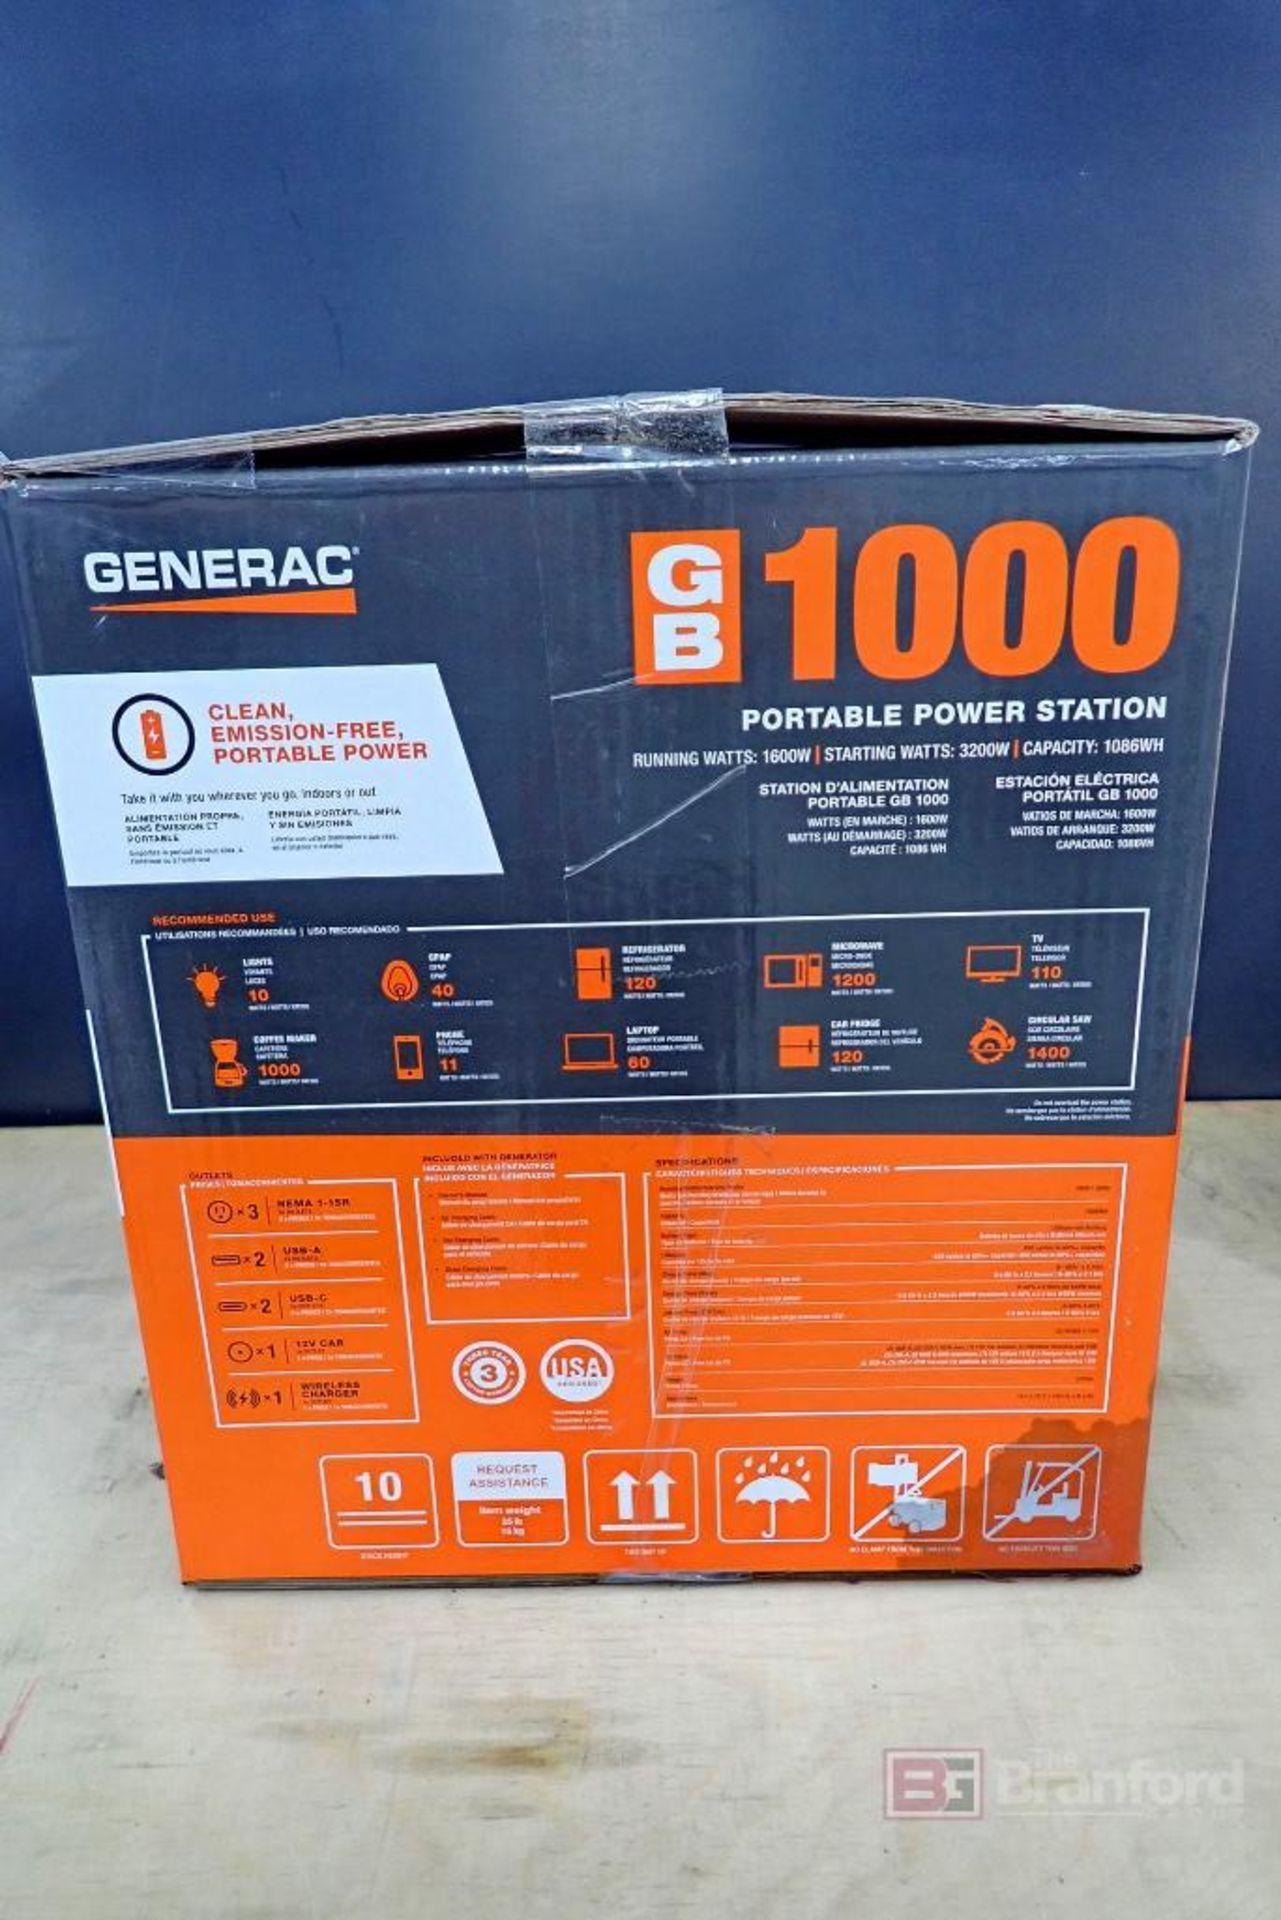 GENERAC GB1000 Portable Power Station - Image 6 of 9